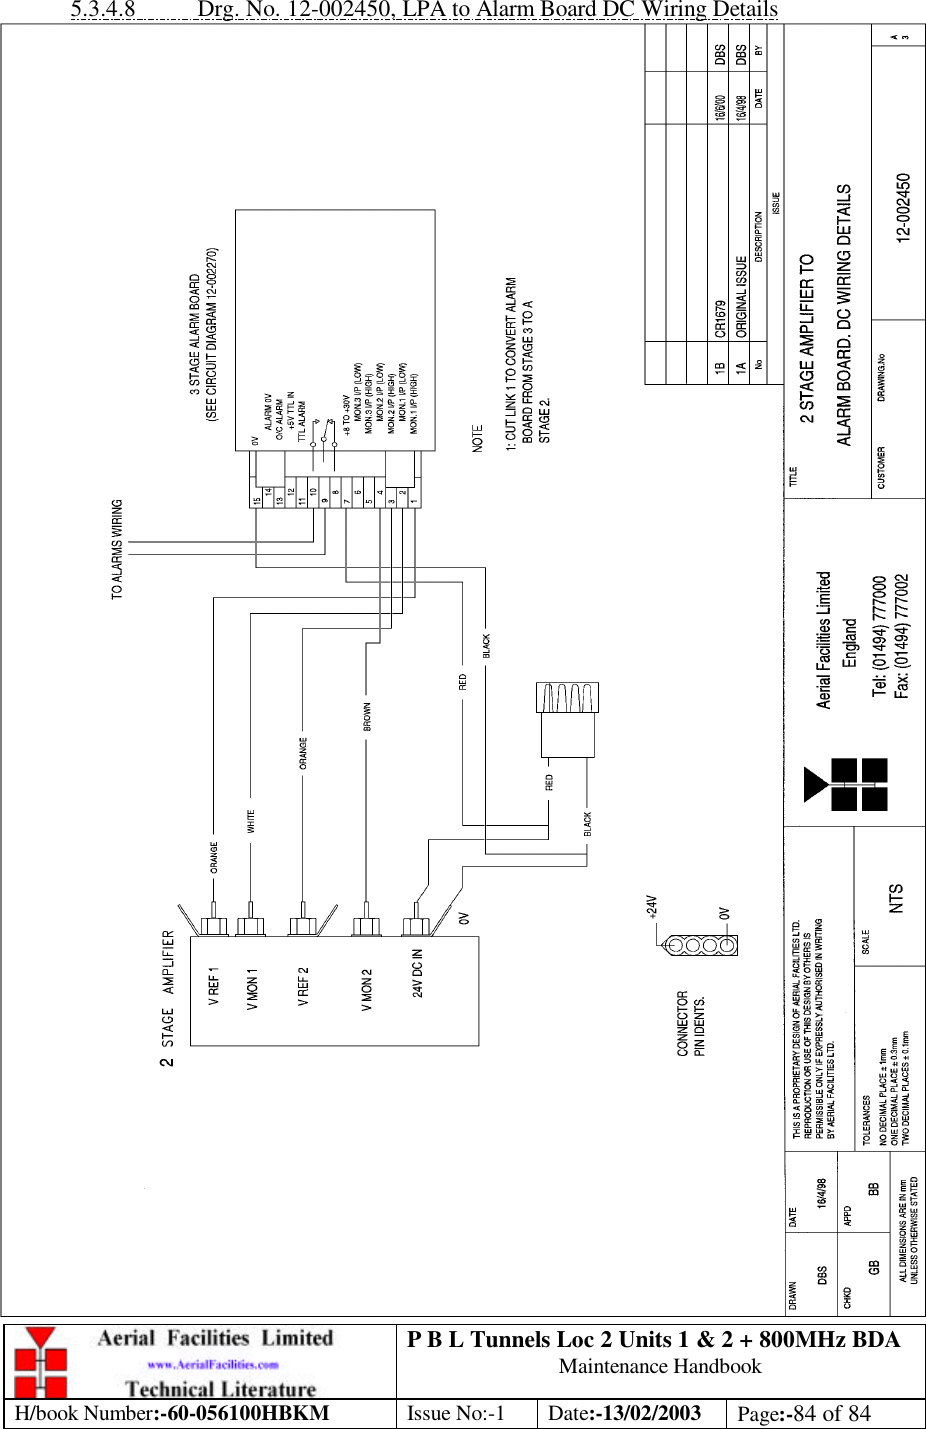 P B L Tunnels Loc 2 Units 1 &amp; 2 + 800MHz BDA Maintenance Handbook H/book Number:-60-056100HBKM Issue No:-1 Date:-13/02/2003 Page:-84 of 84  5.3.4.8 Drg. No. 12-002450, LPA to Alarm Board DC Wiring Details  